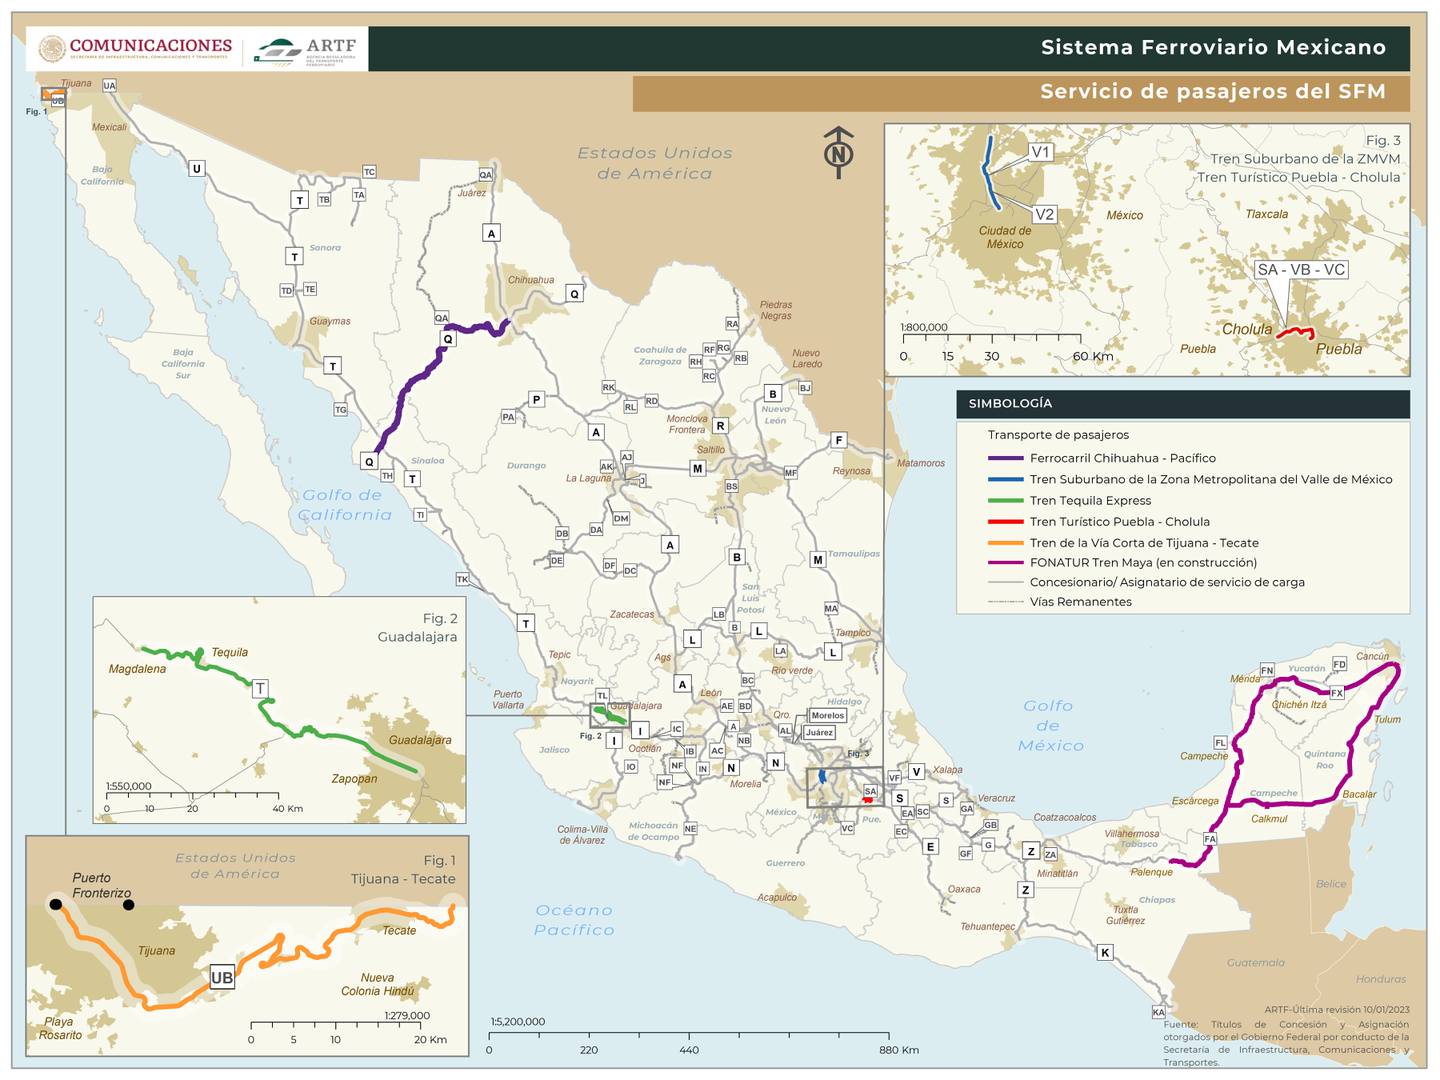 4. Mapa General del Sistema Ferroviario de Transporte de Pasajeros.